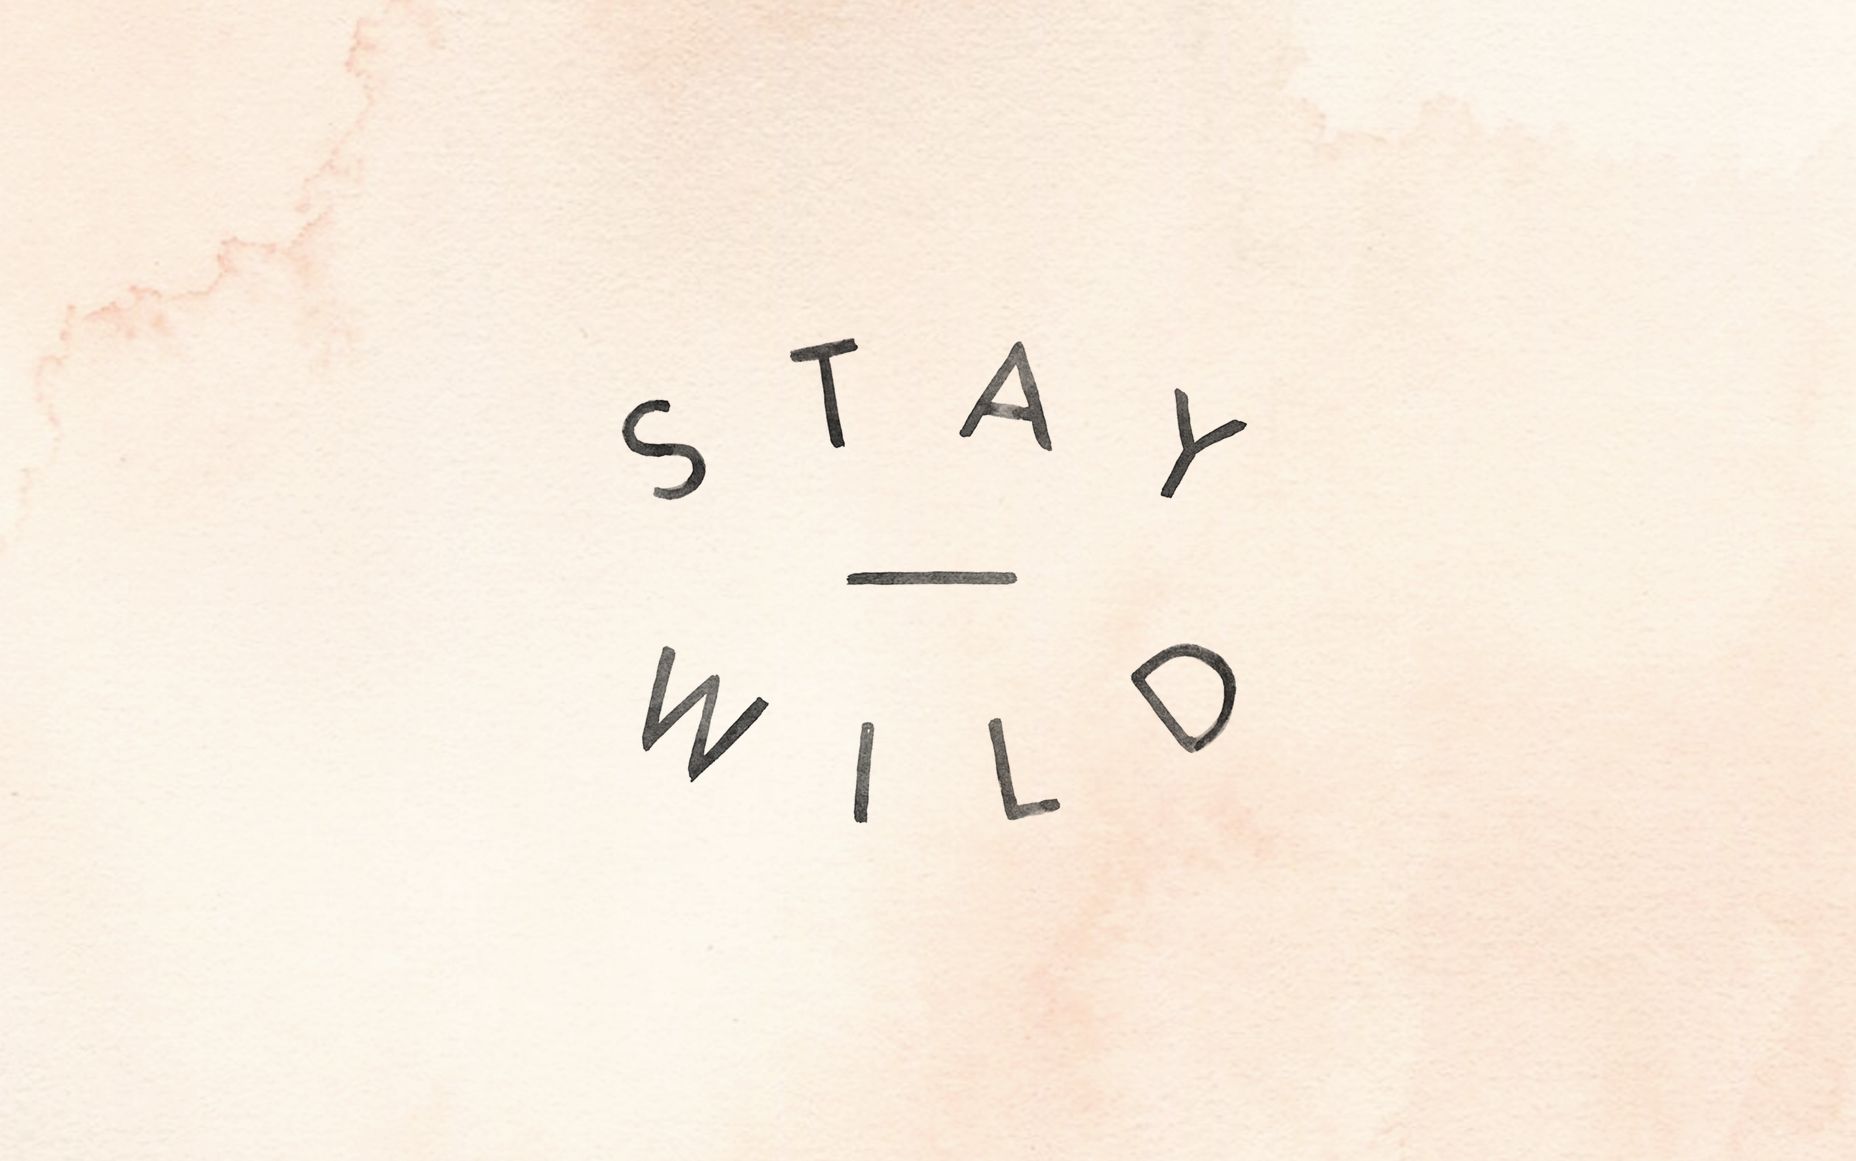 Stay Wild Wallpaper Free Stay Wild Background